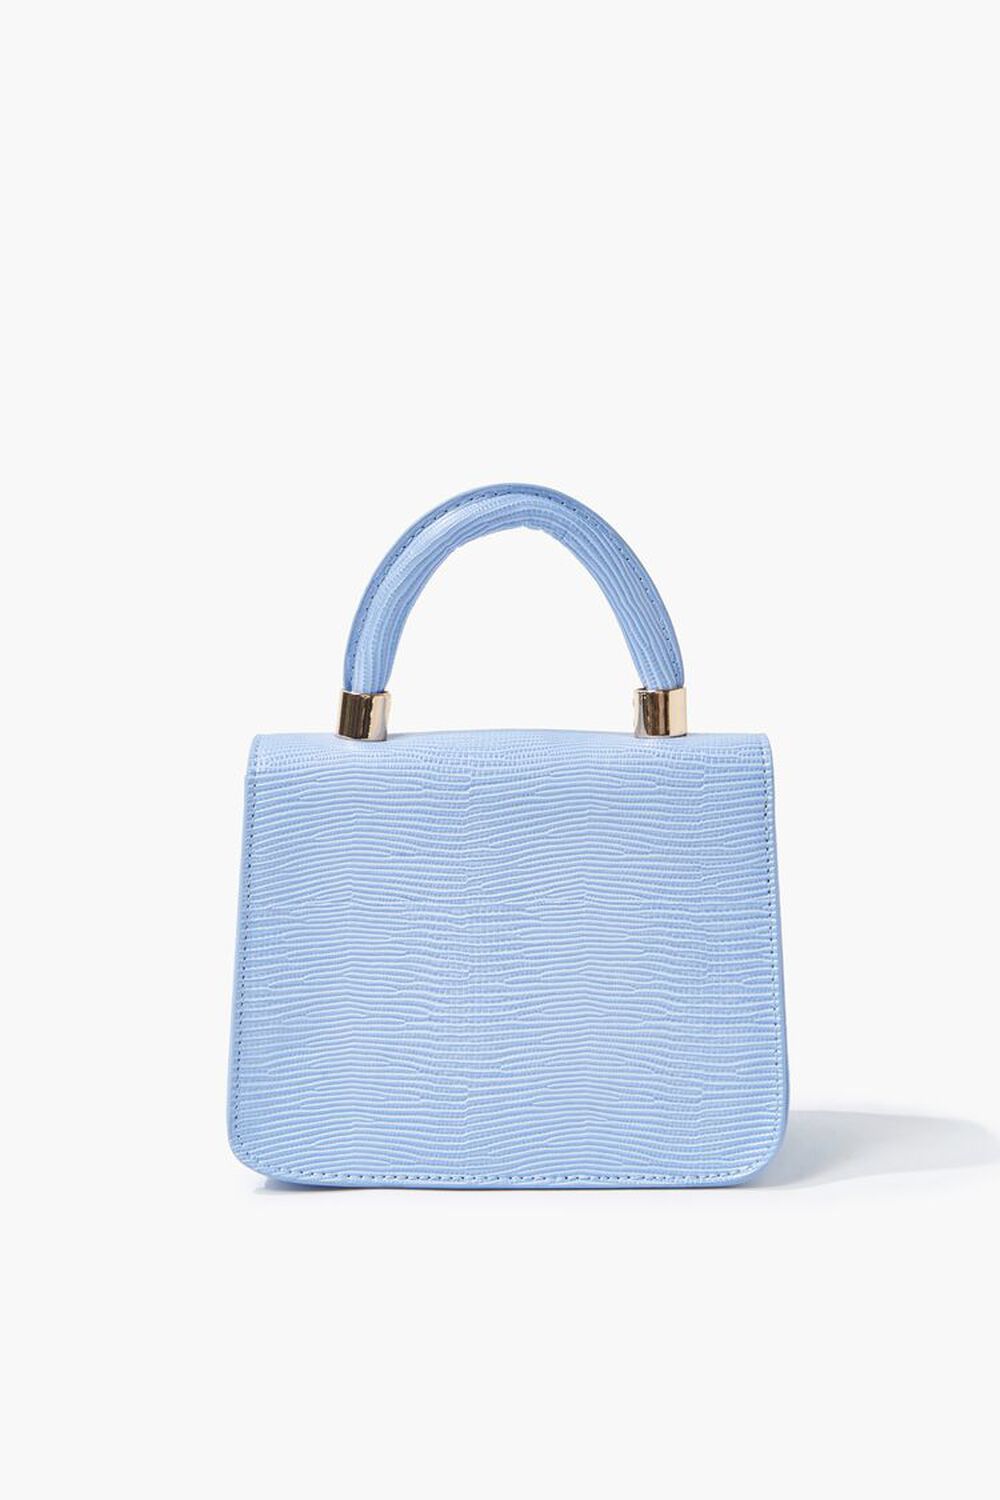 BLUE Pebbled Crossbody Bag, image 3